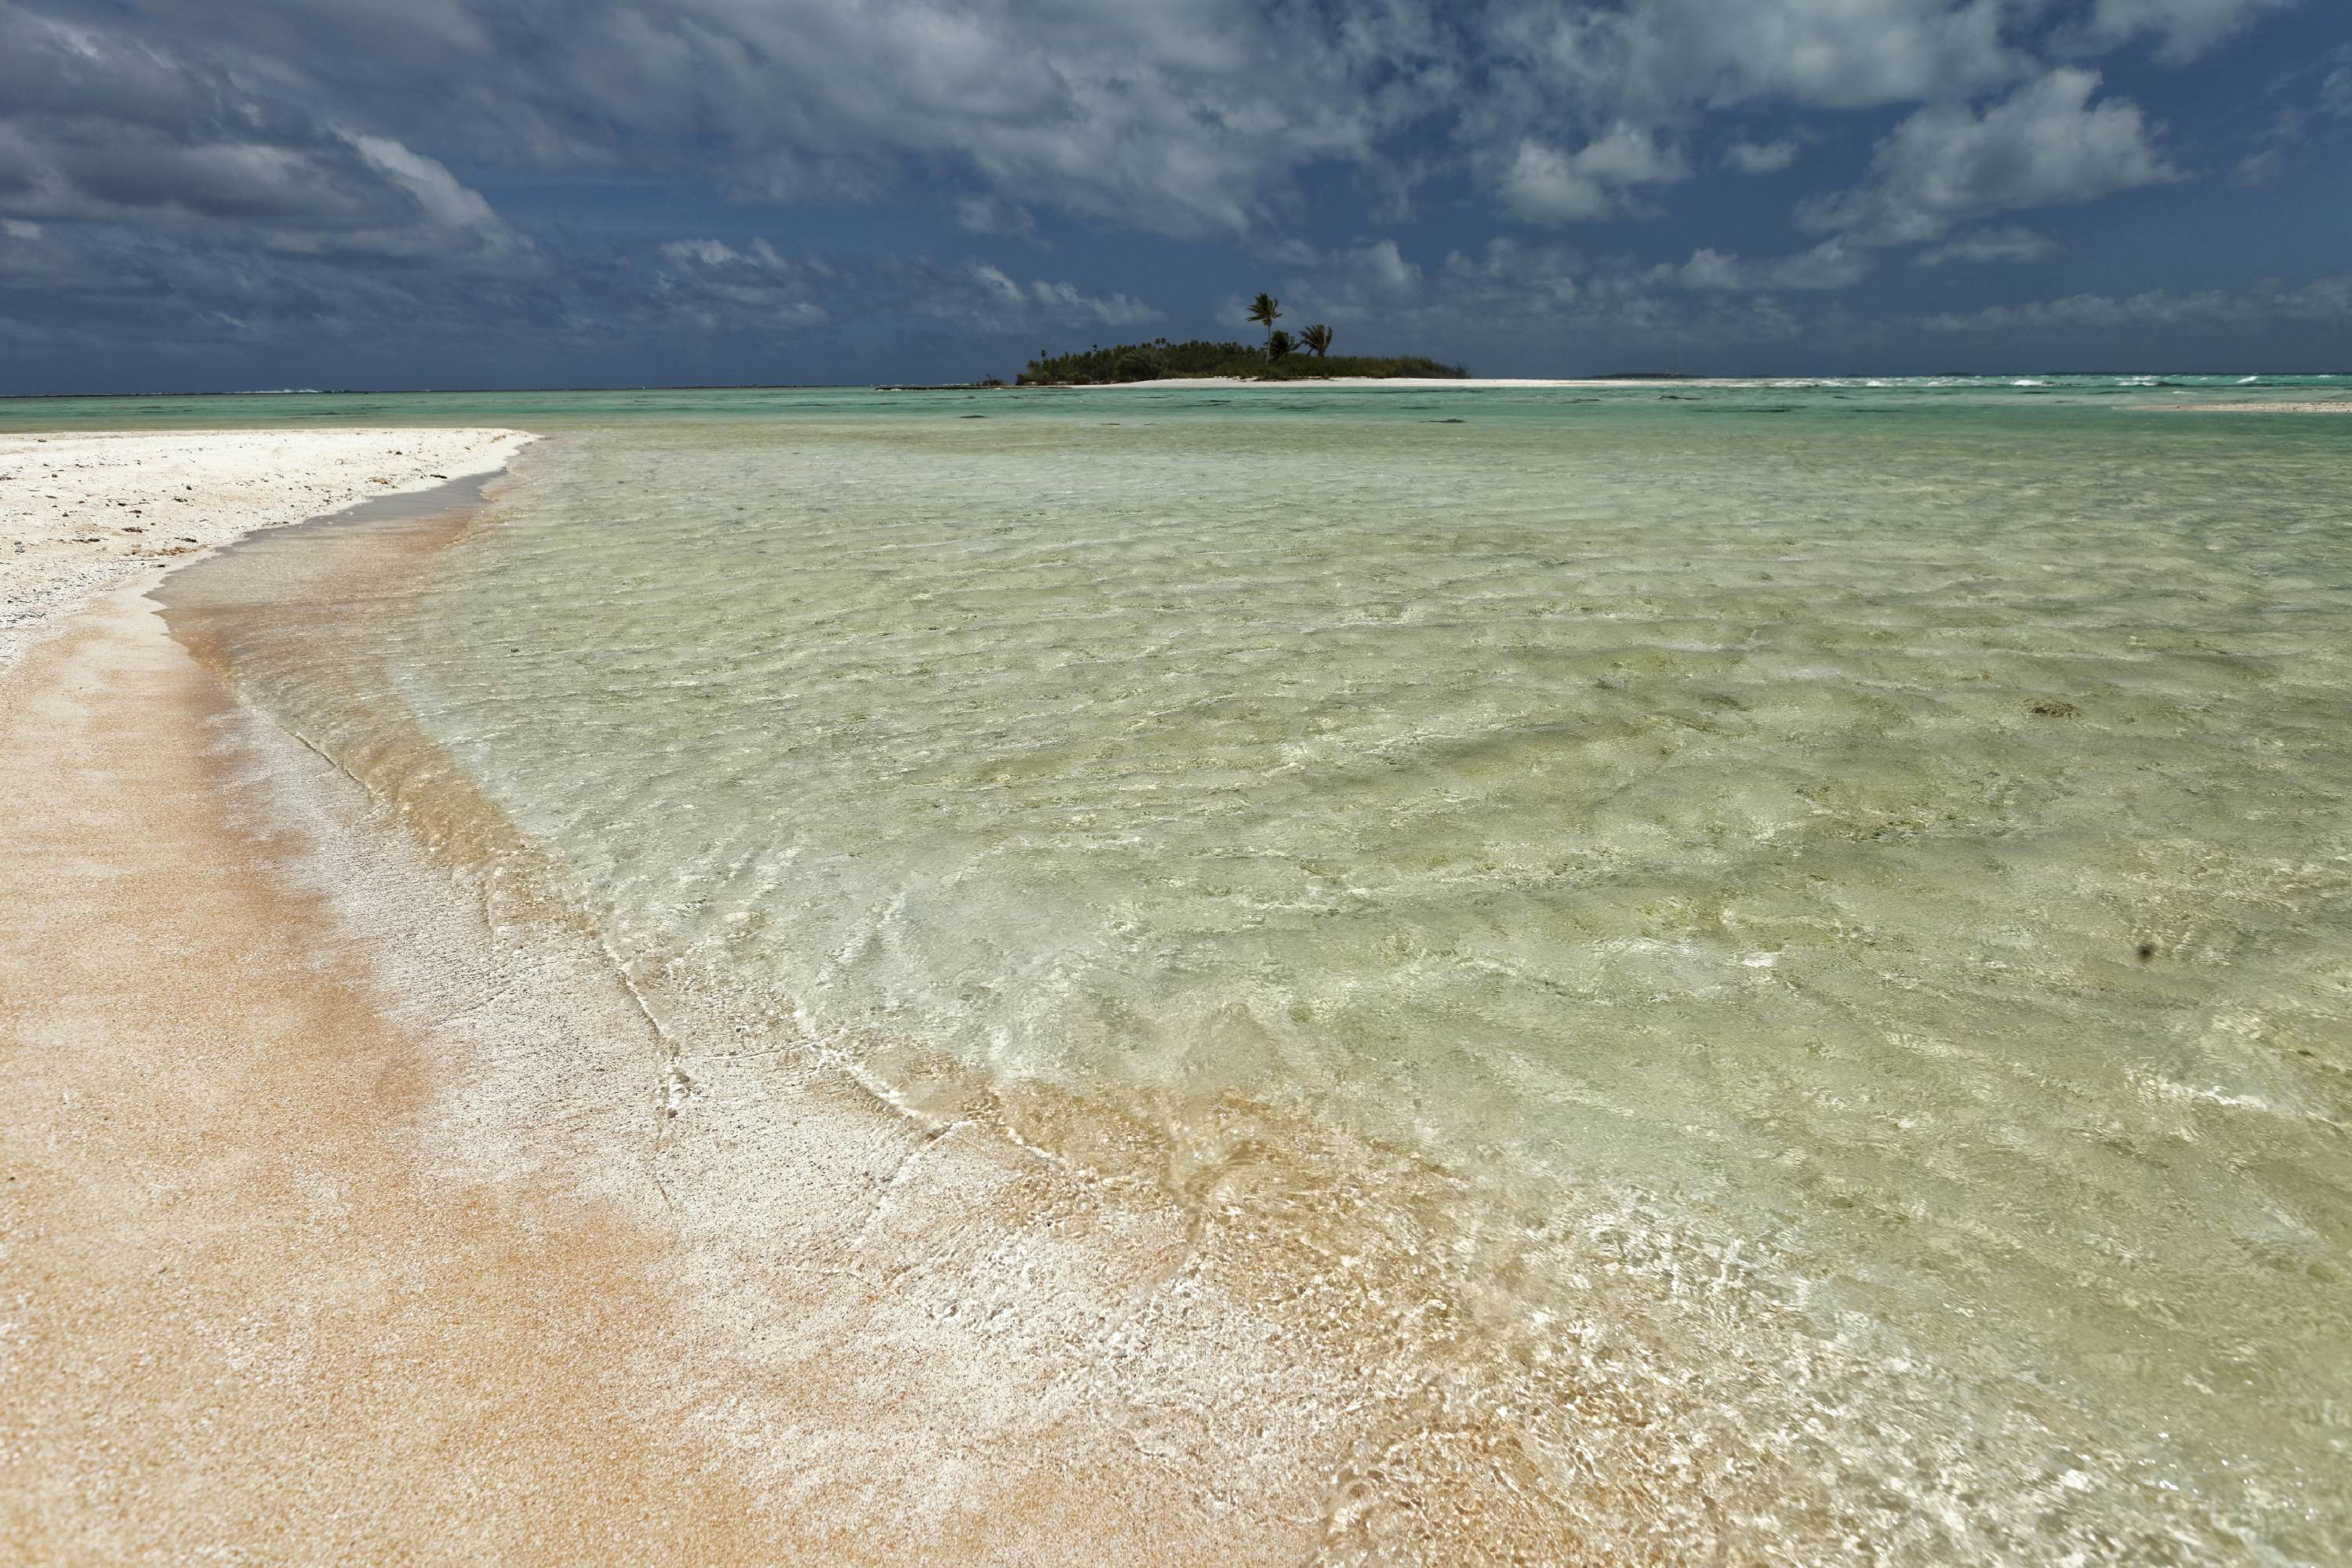 Les sables roses, Fakarava, Tuamotu - Drone Photography